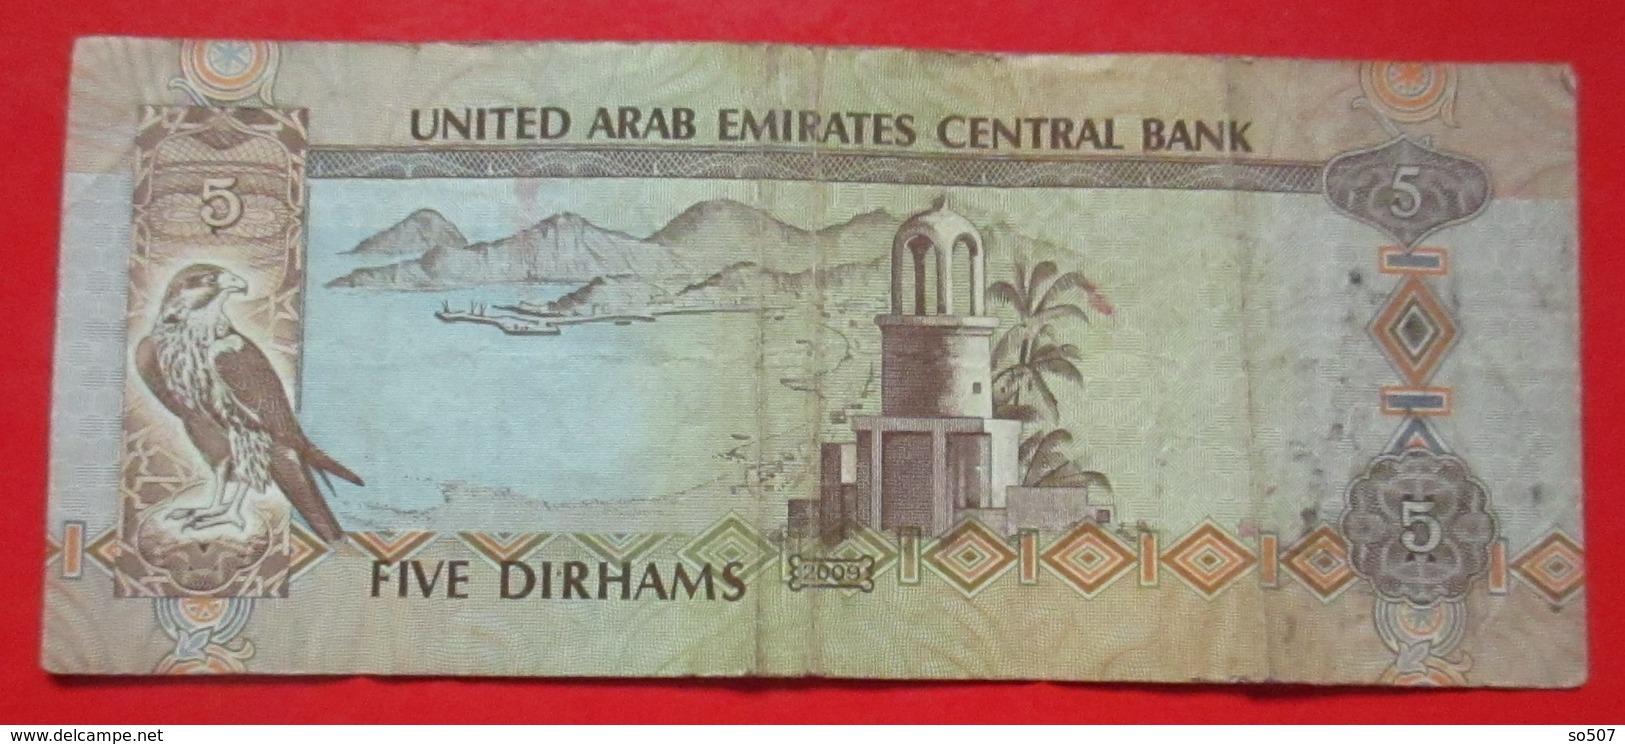 X1- 5 Dirhams 2009. United Arab Emirates- Five Dirhams, Circulated Banknote - Emirats Arabes Unis